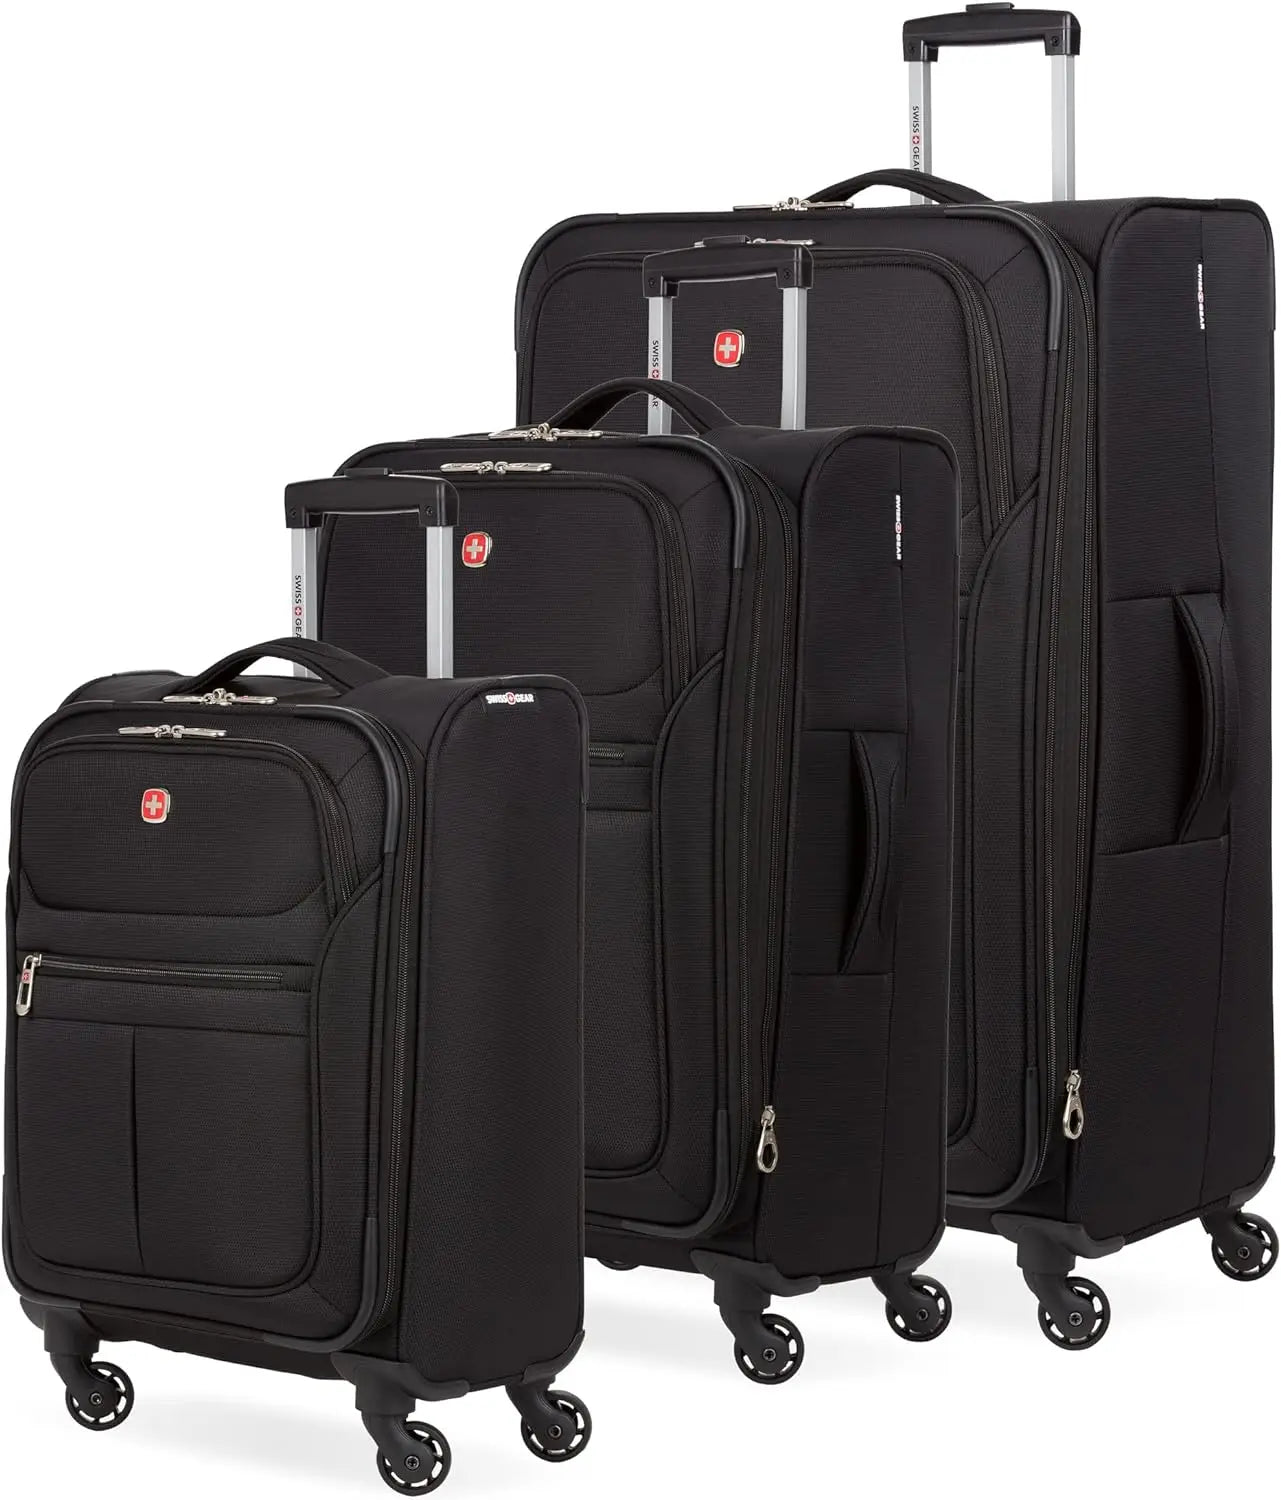 SwissGear 4010 Softside Luggage with Spinner Wheels, Black, 3-Piece Set (18/23/27)